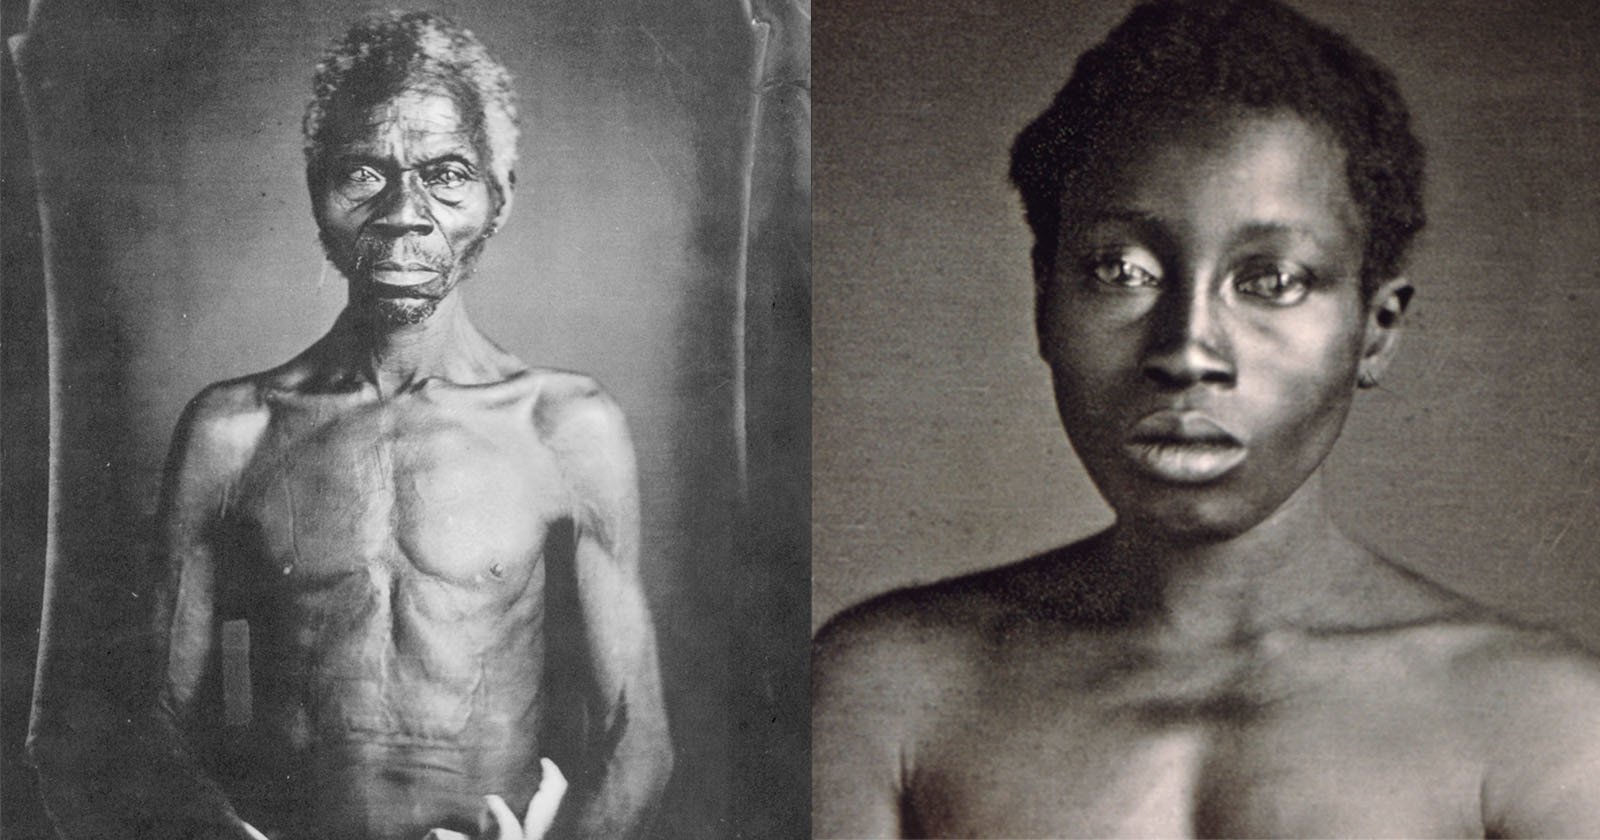  court rules descendant slaves depicted photos can sue 